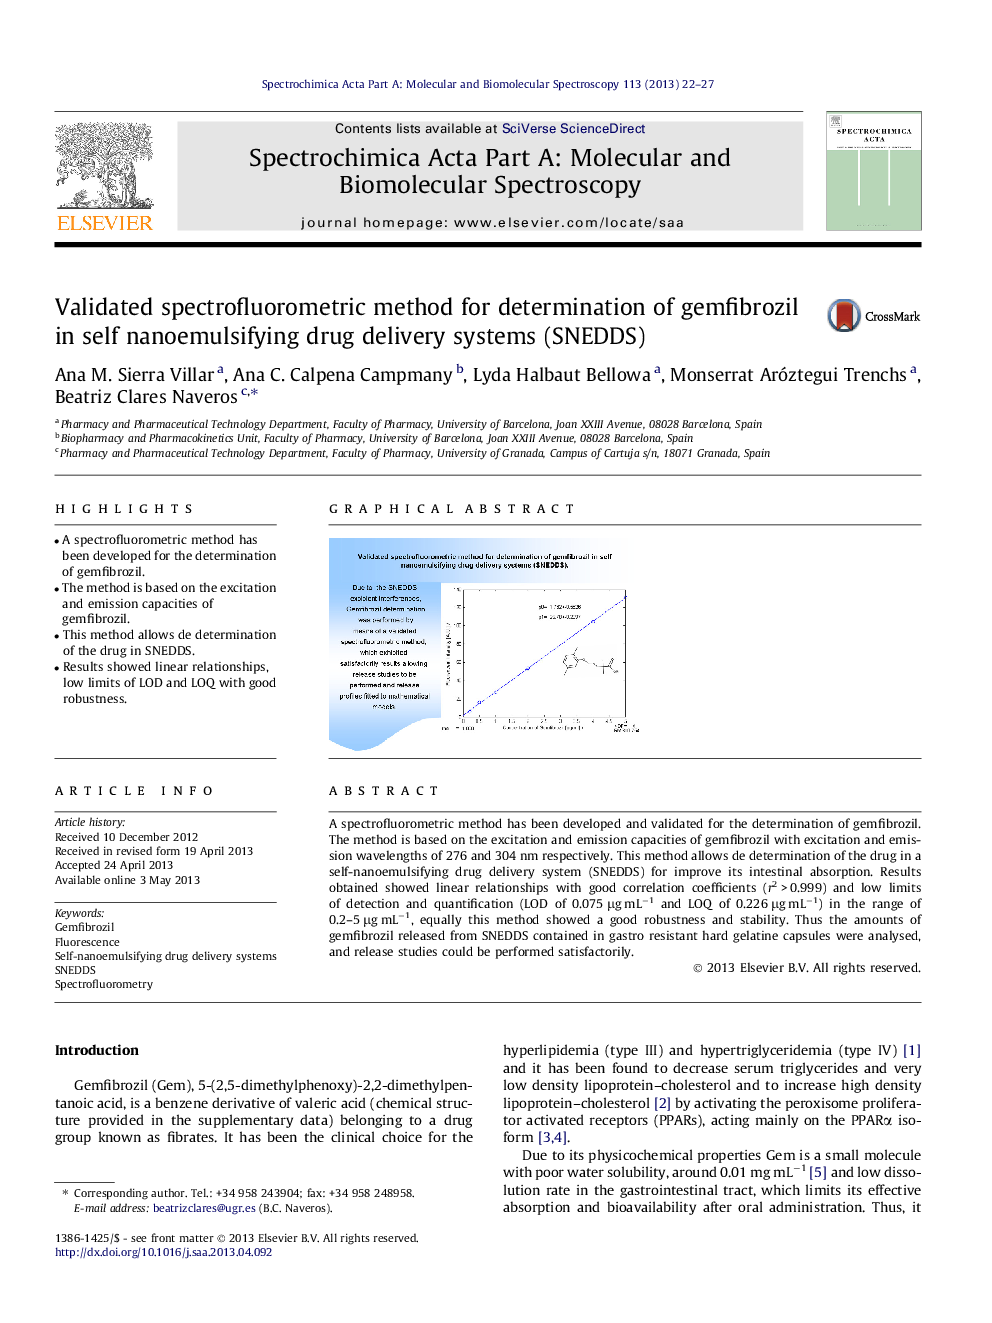 Validated spectrofluorometric method for determination of gemfibrozil in self nanoemulsifying drug delivery systems (SNEDDS)